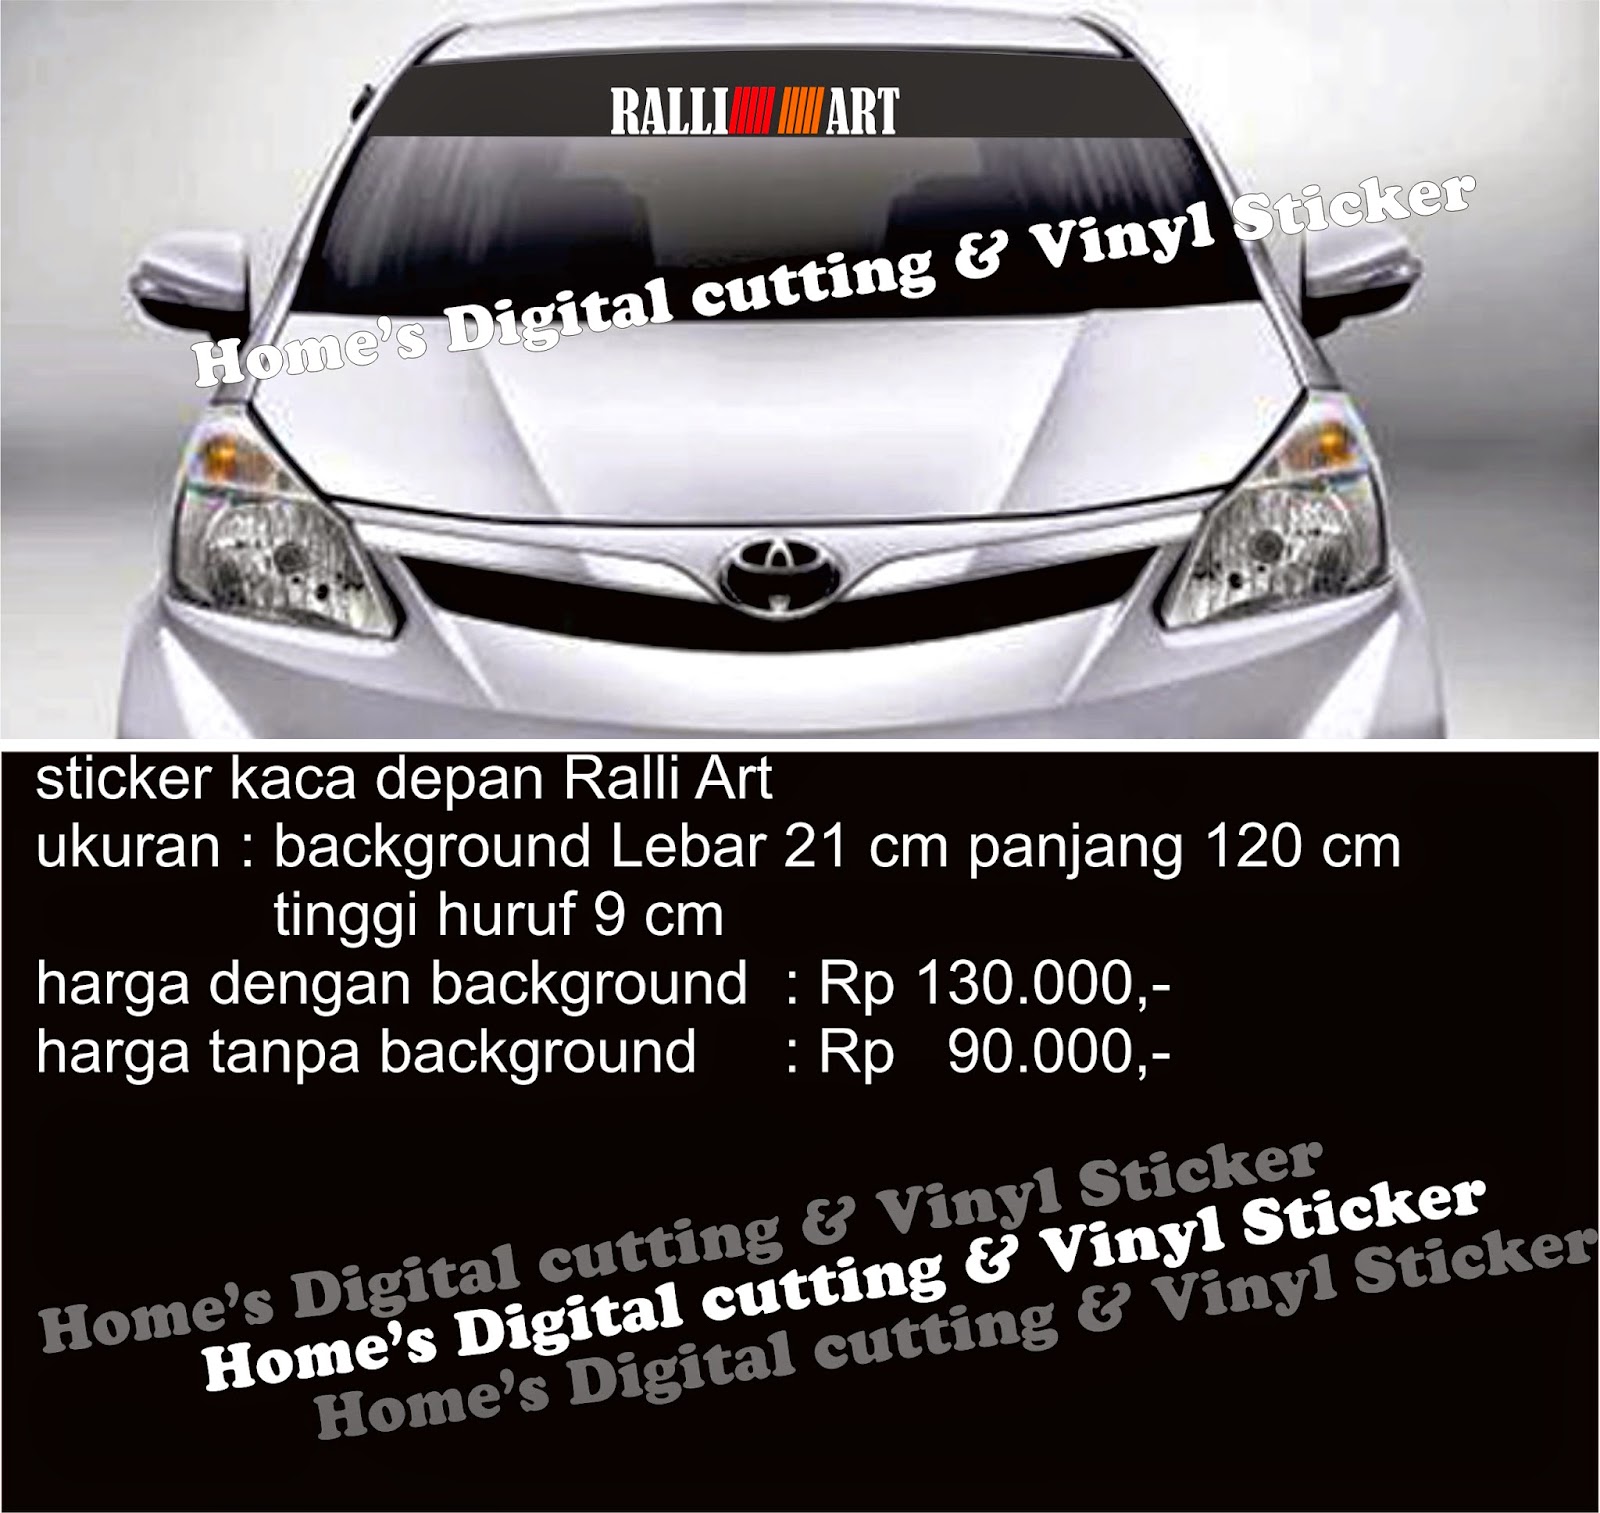 Home s Digital Cutting and Vinyl Sticker Sticker Kaca  Mobil